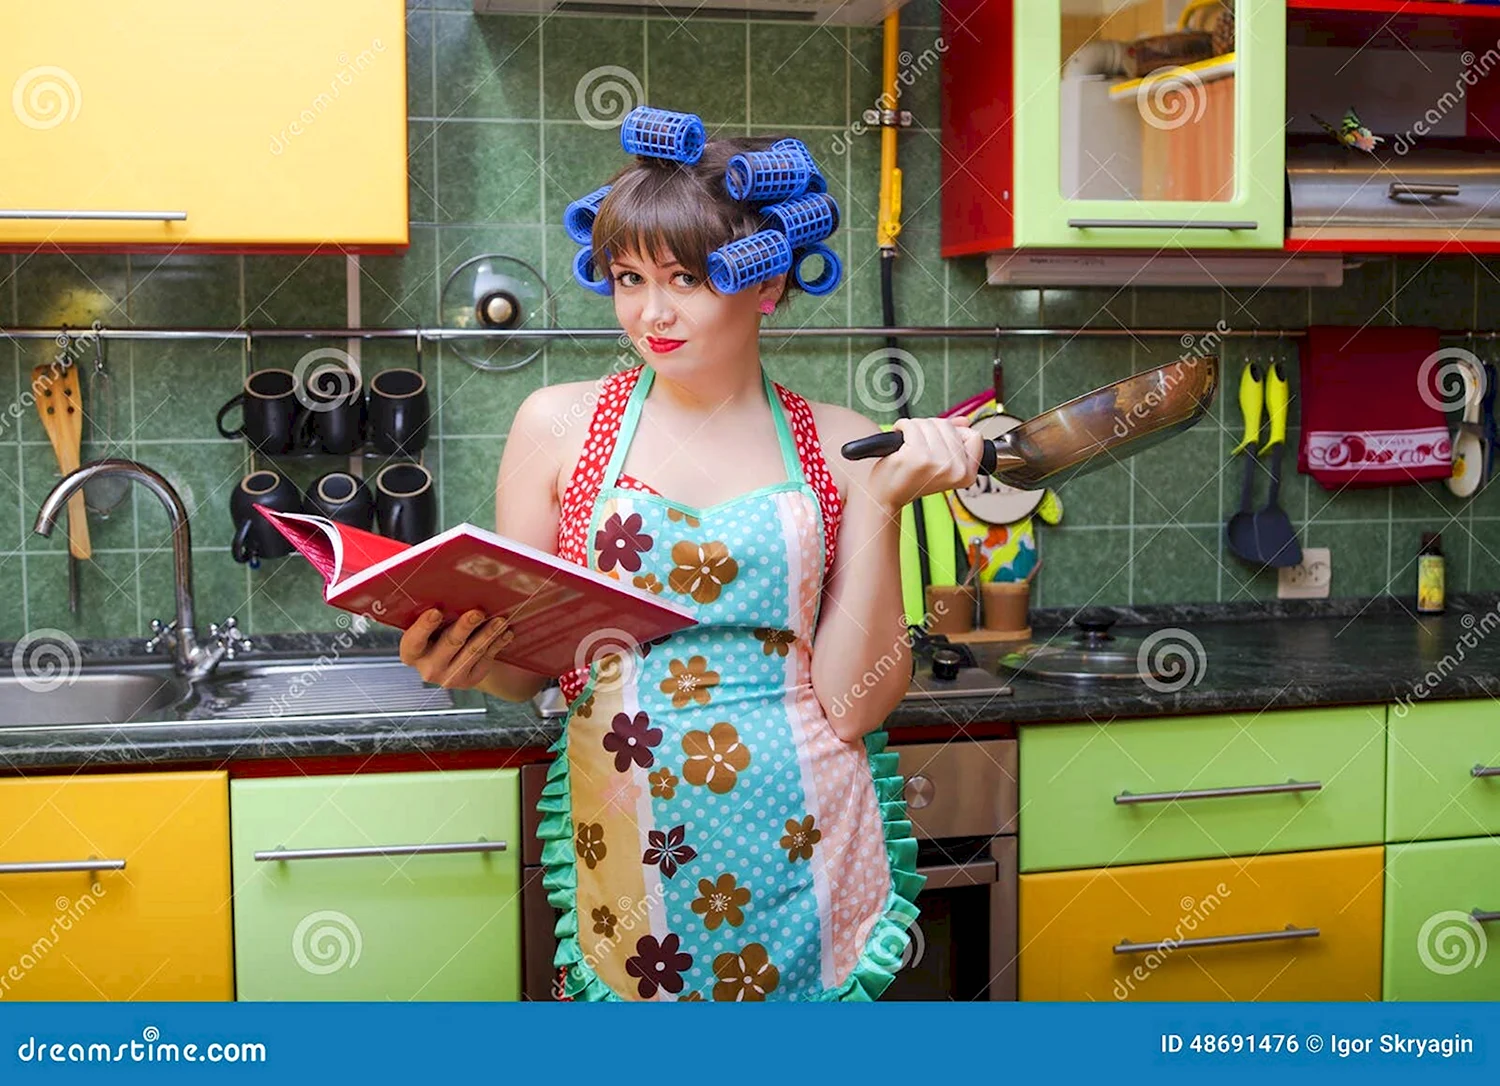 Женщина в бигудях на кухне